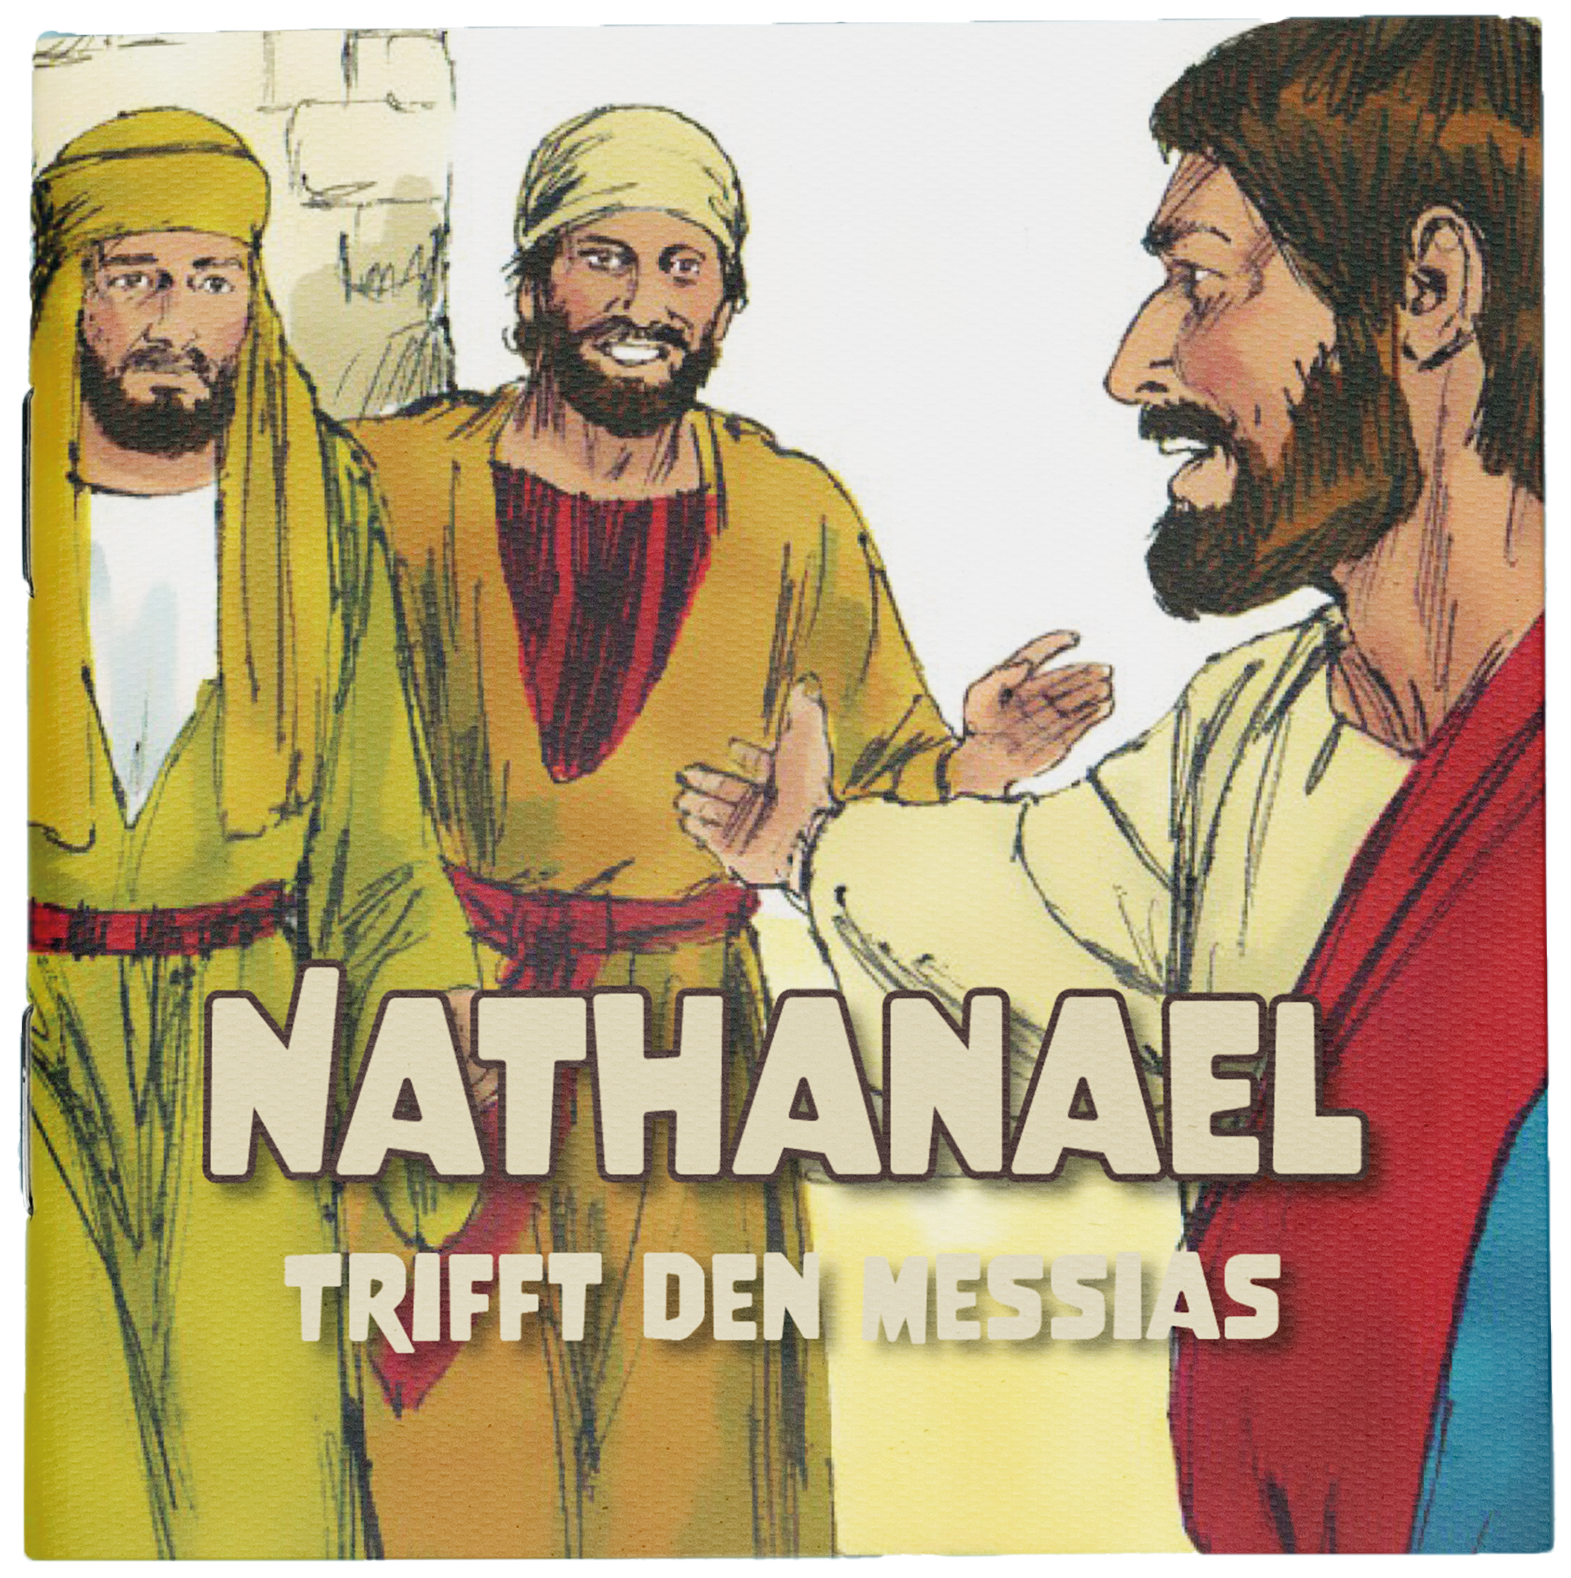 Nathanael trifft den Messias